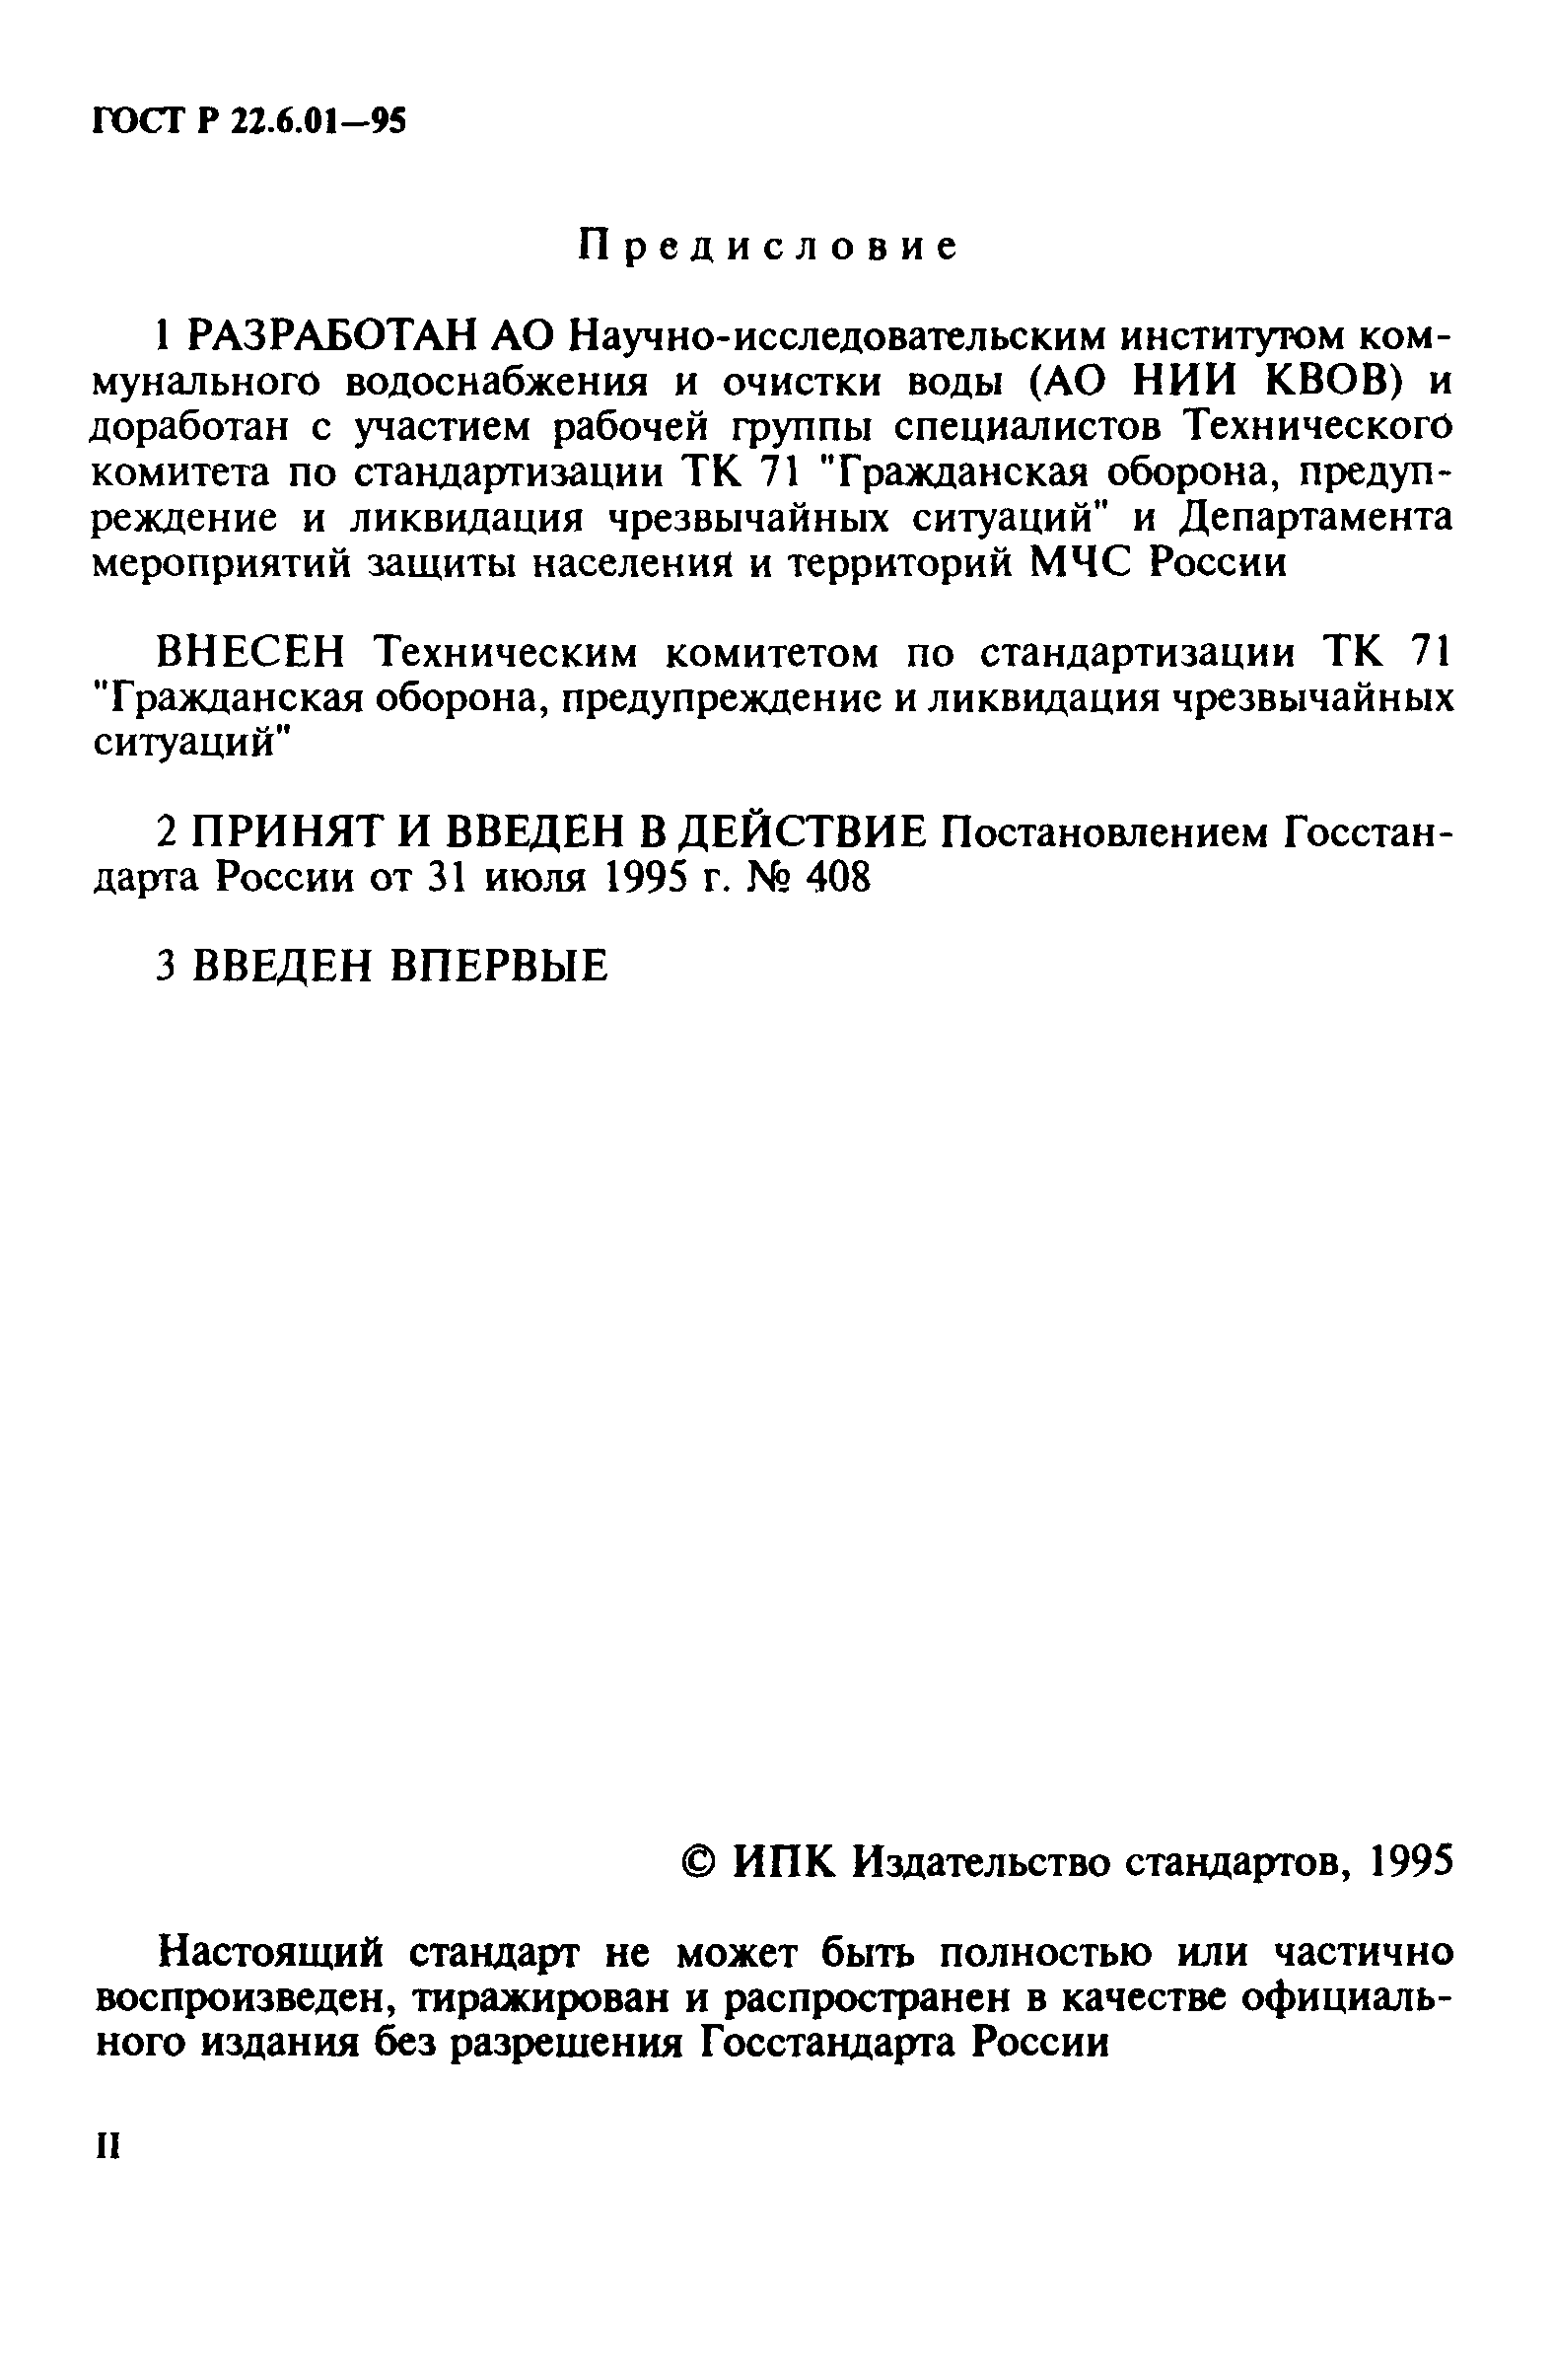 ГОСТ Р 22.6.01-95